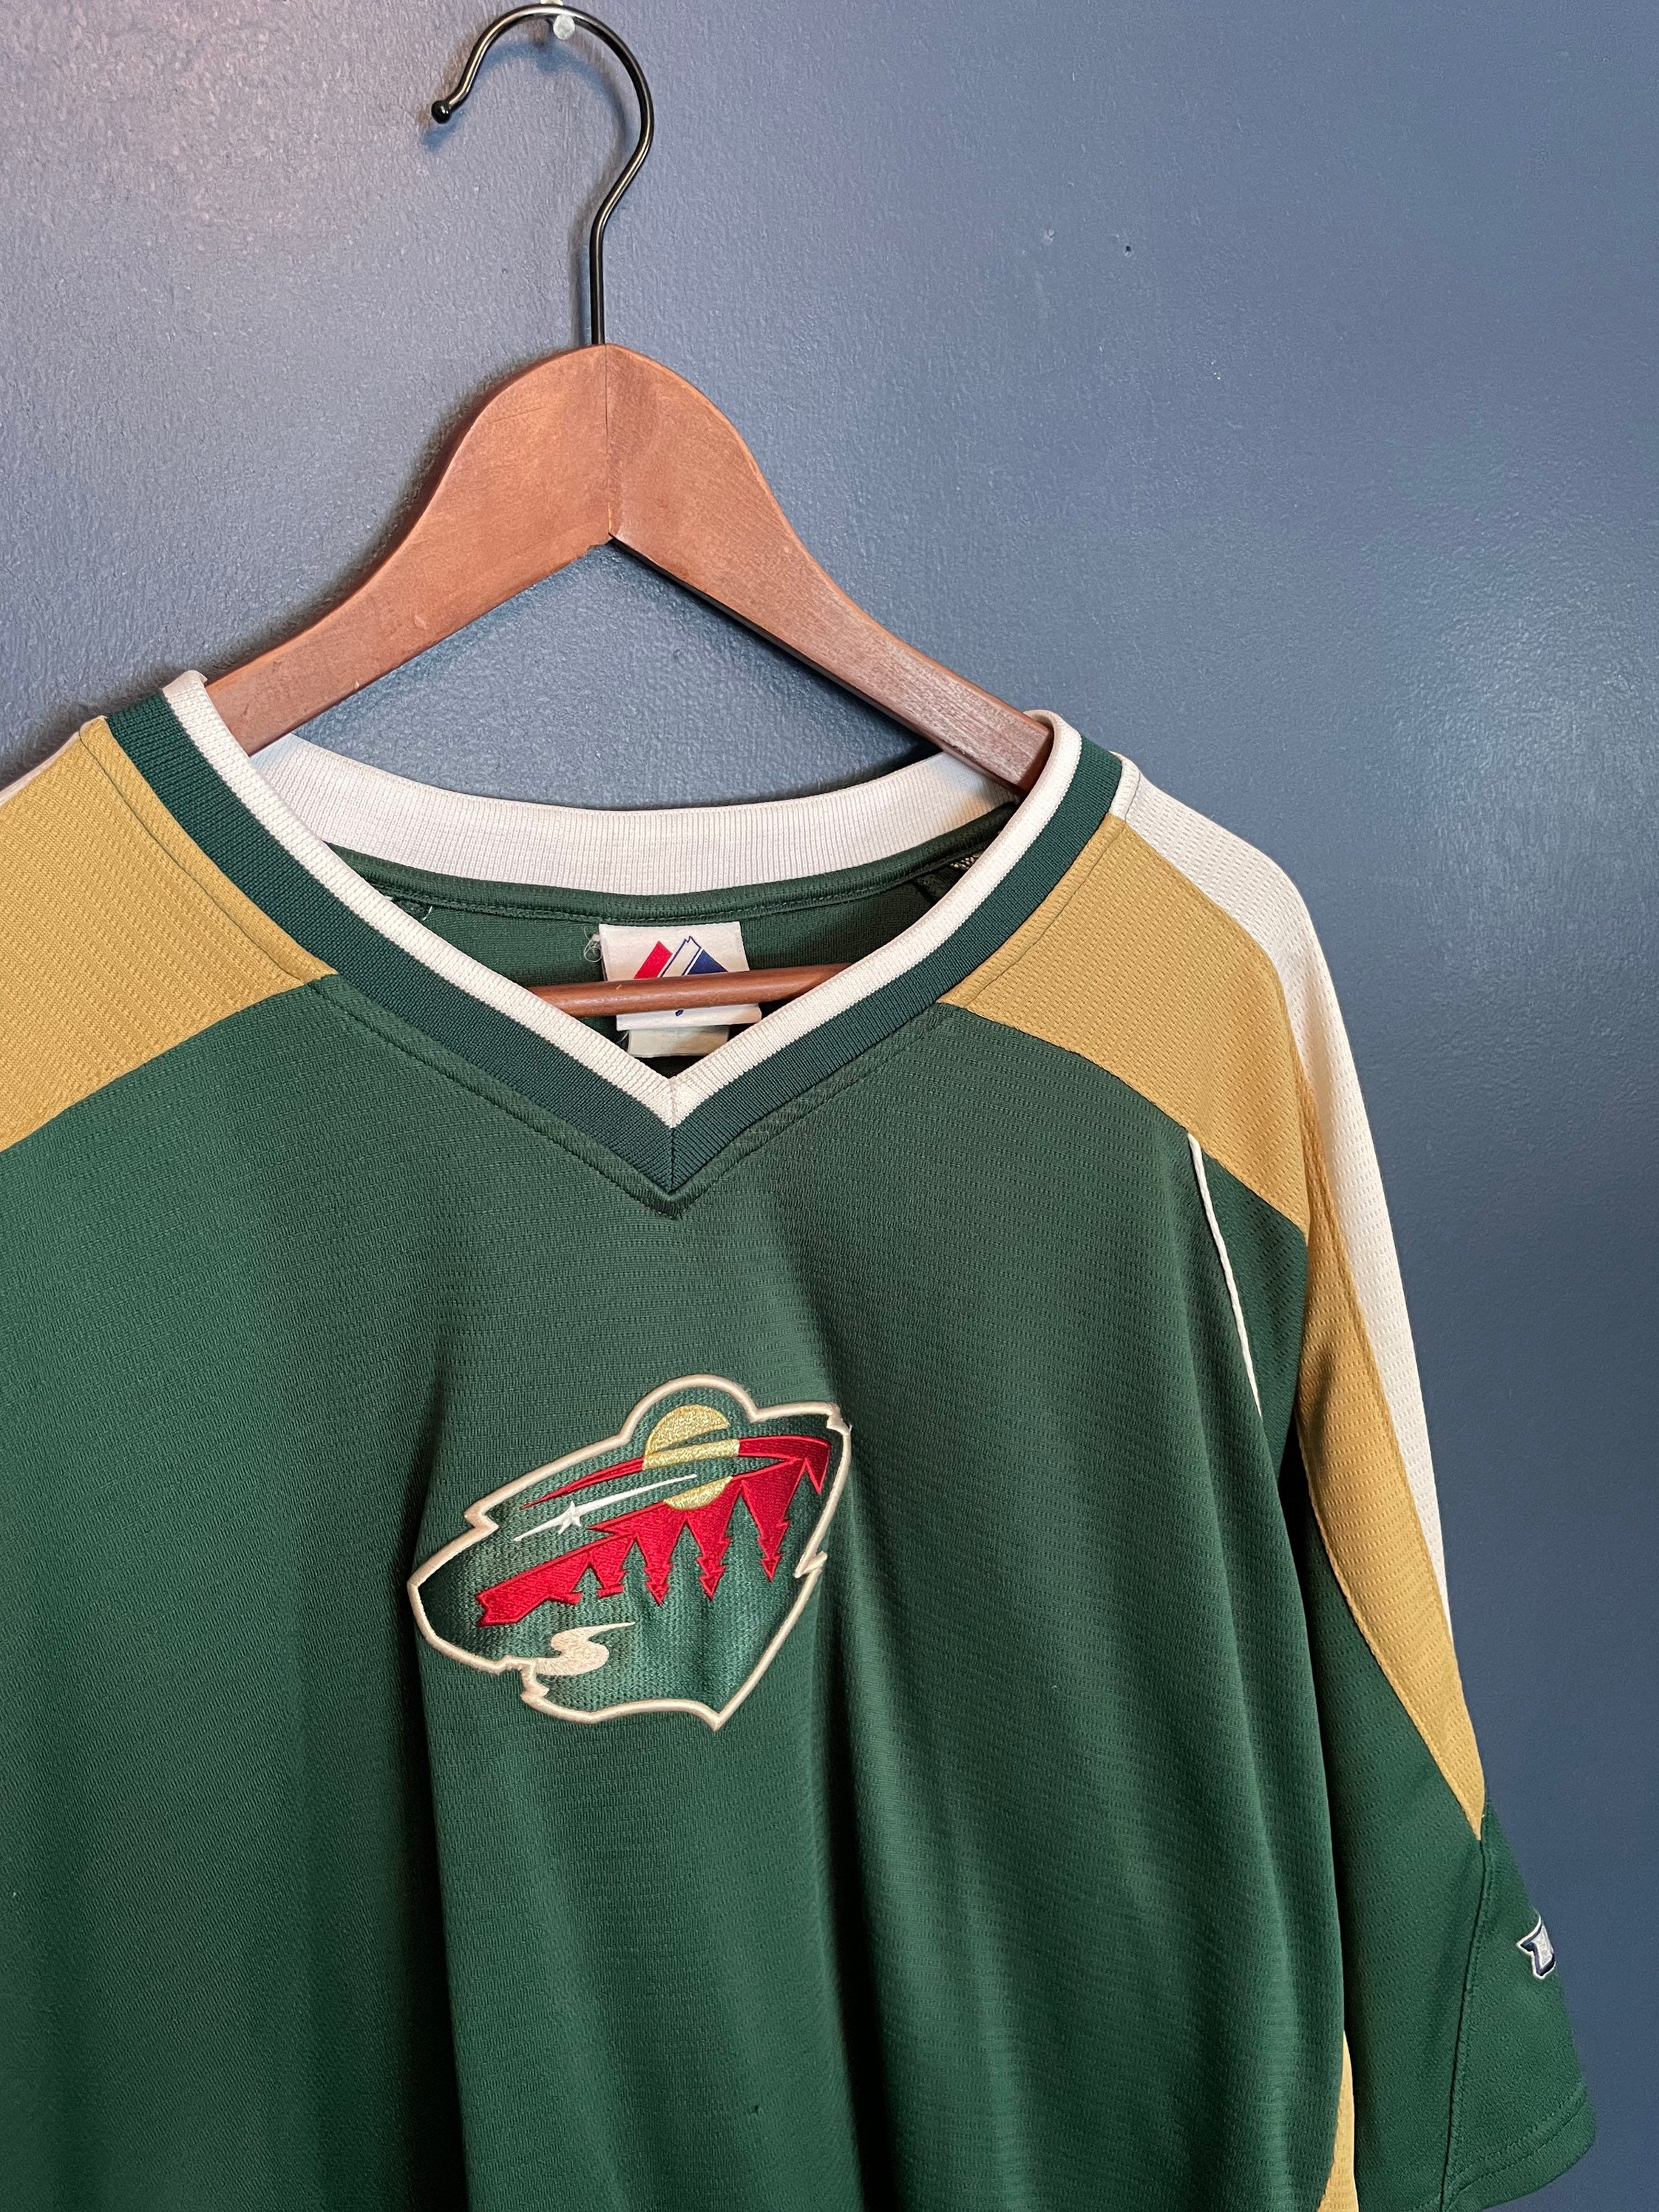 Minnesota Wild Jersey / North Stars / Saints Hockey Concept - Kirill  Kaprizov